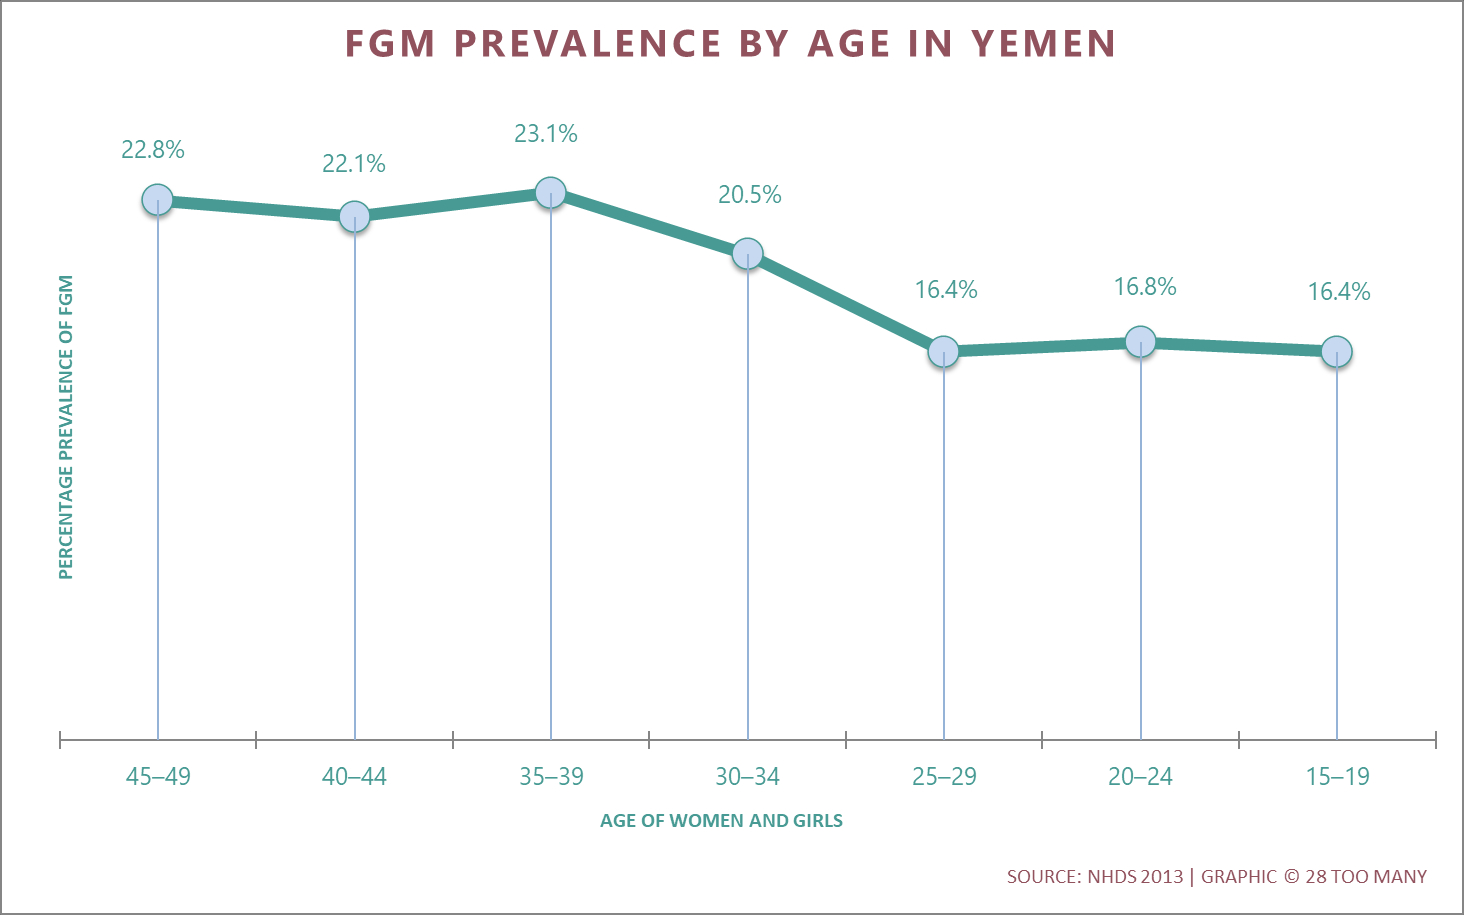 TRENDS IN FGM PREVALENCE